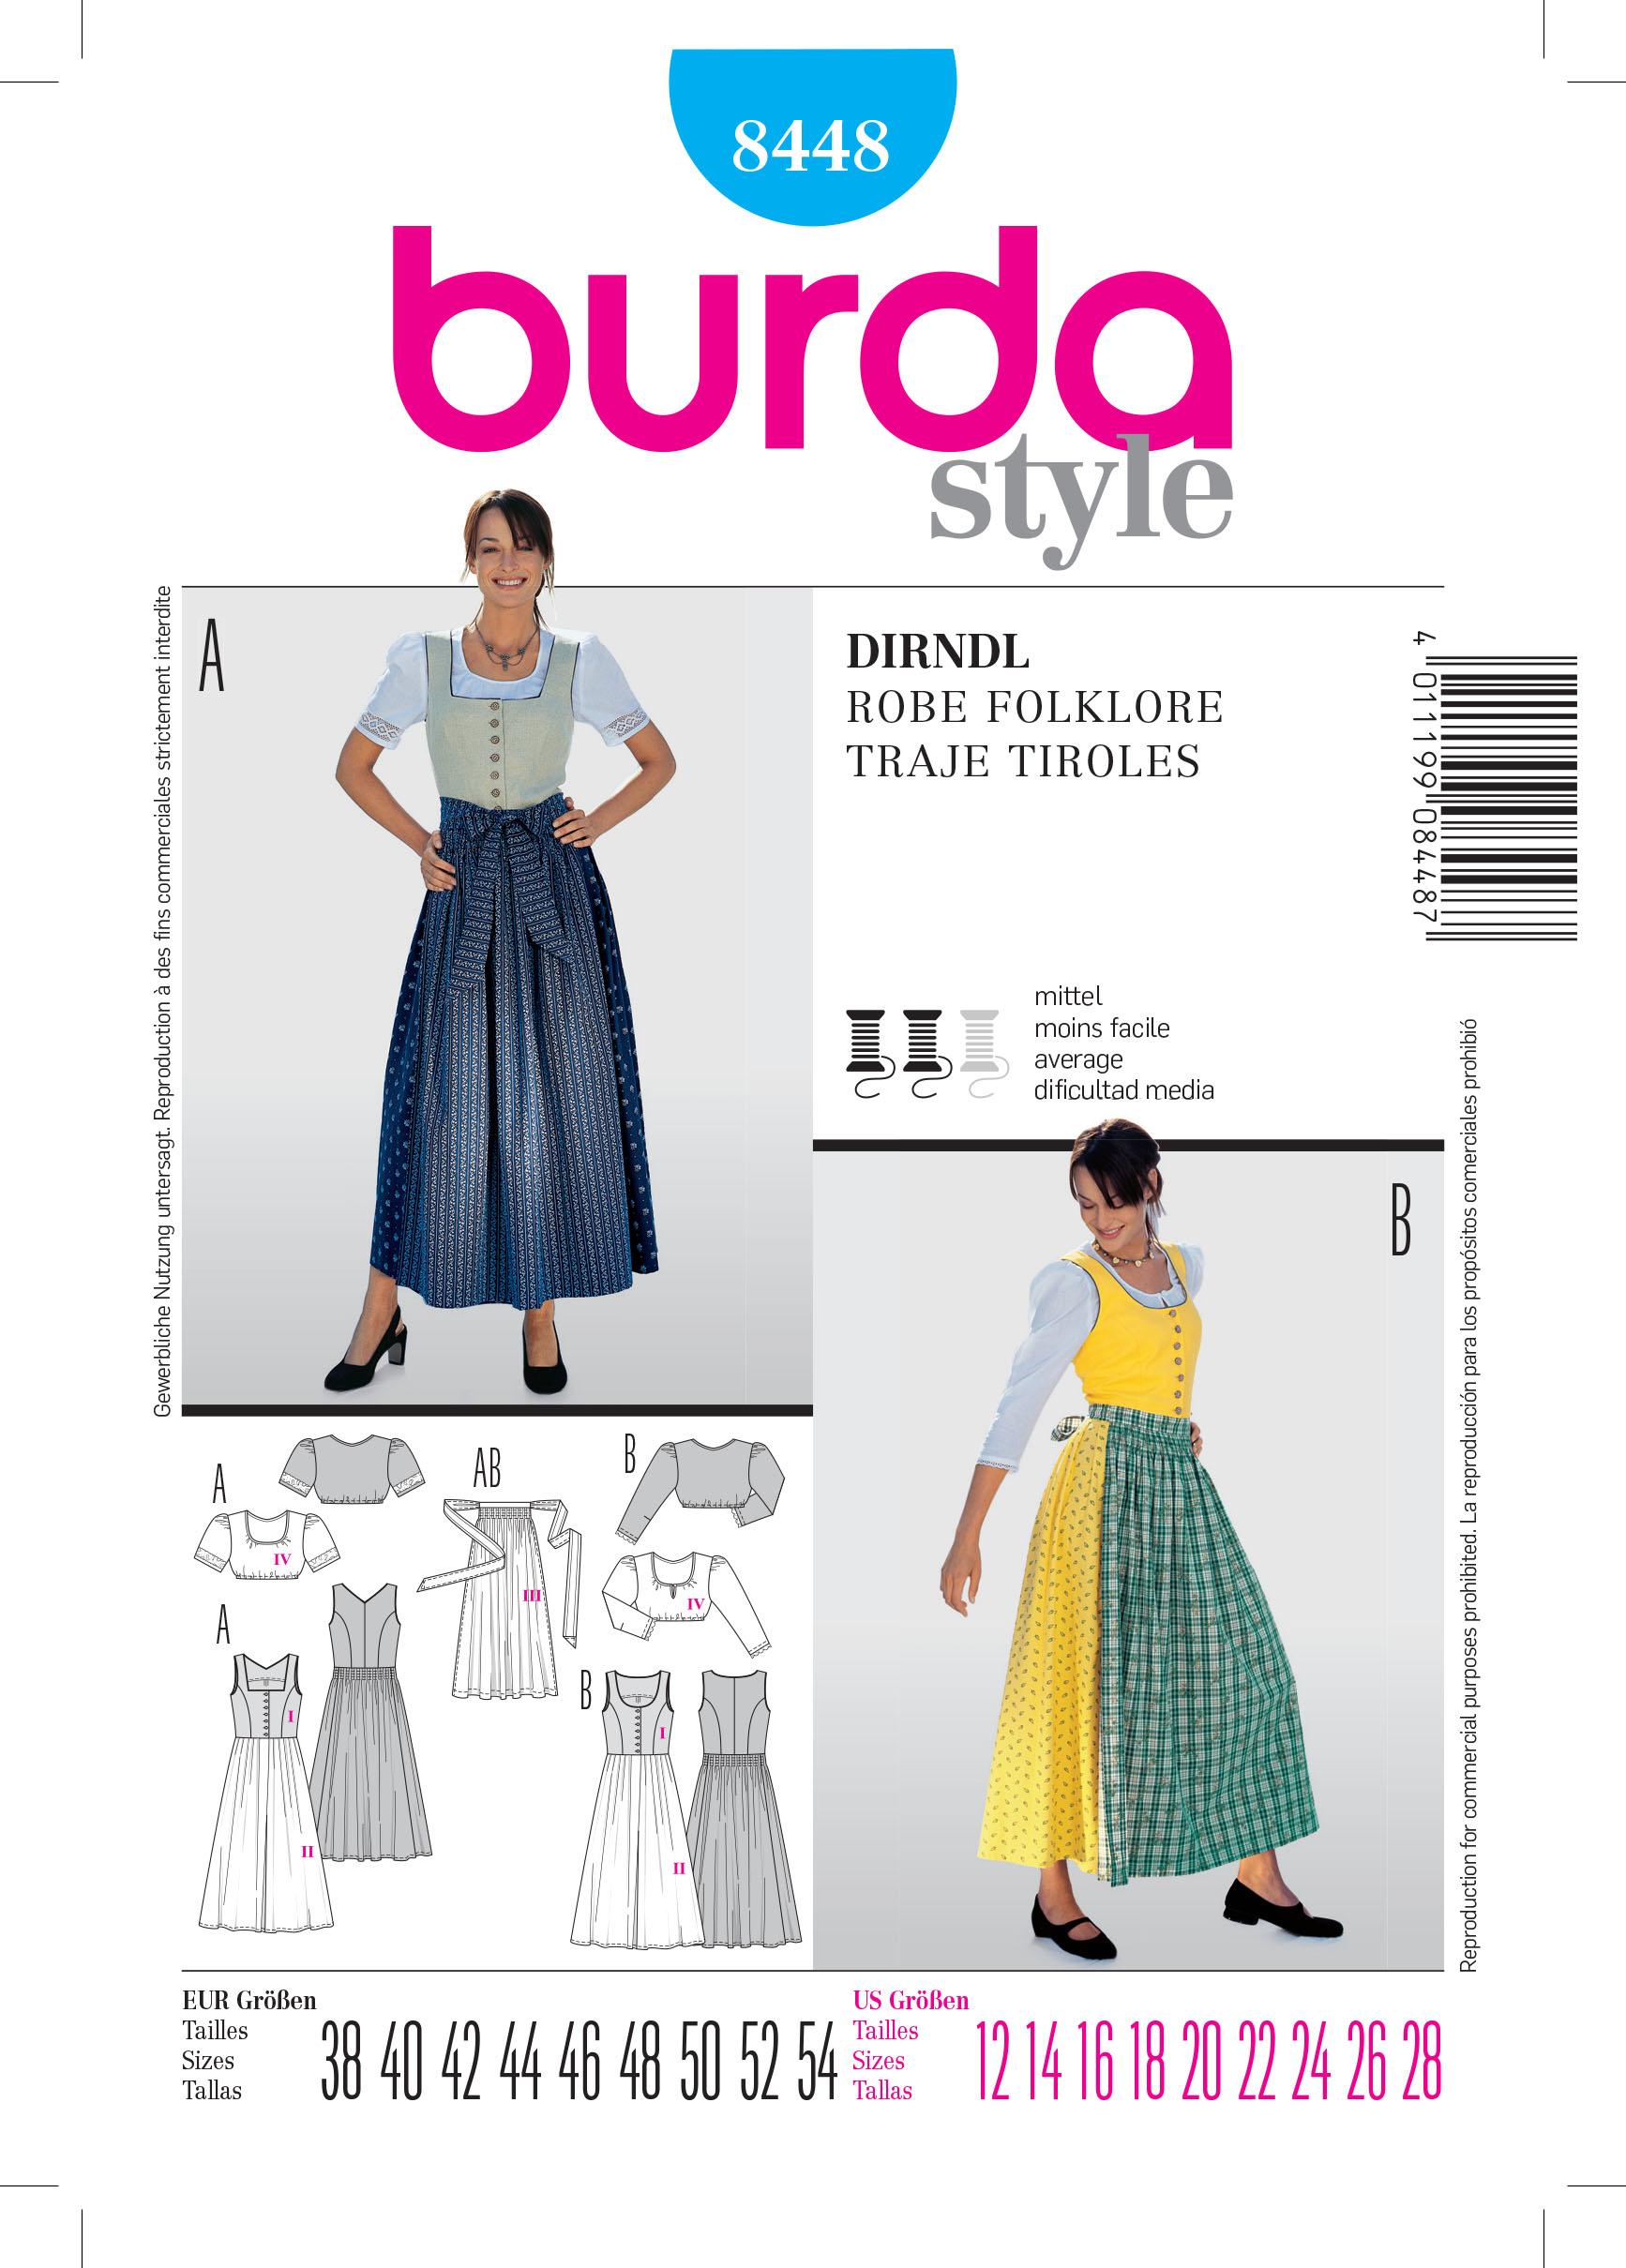 Burda B8448 Dirndl Dress Sewing Pattern